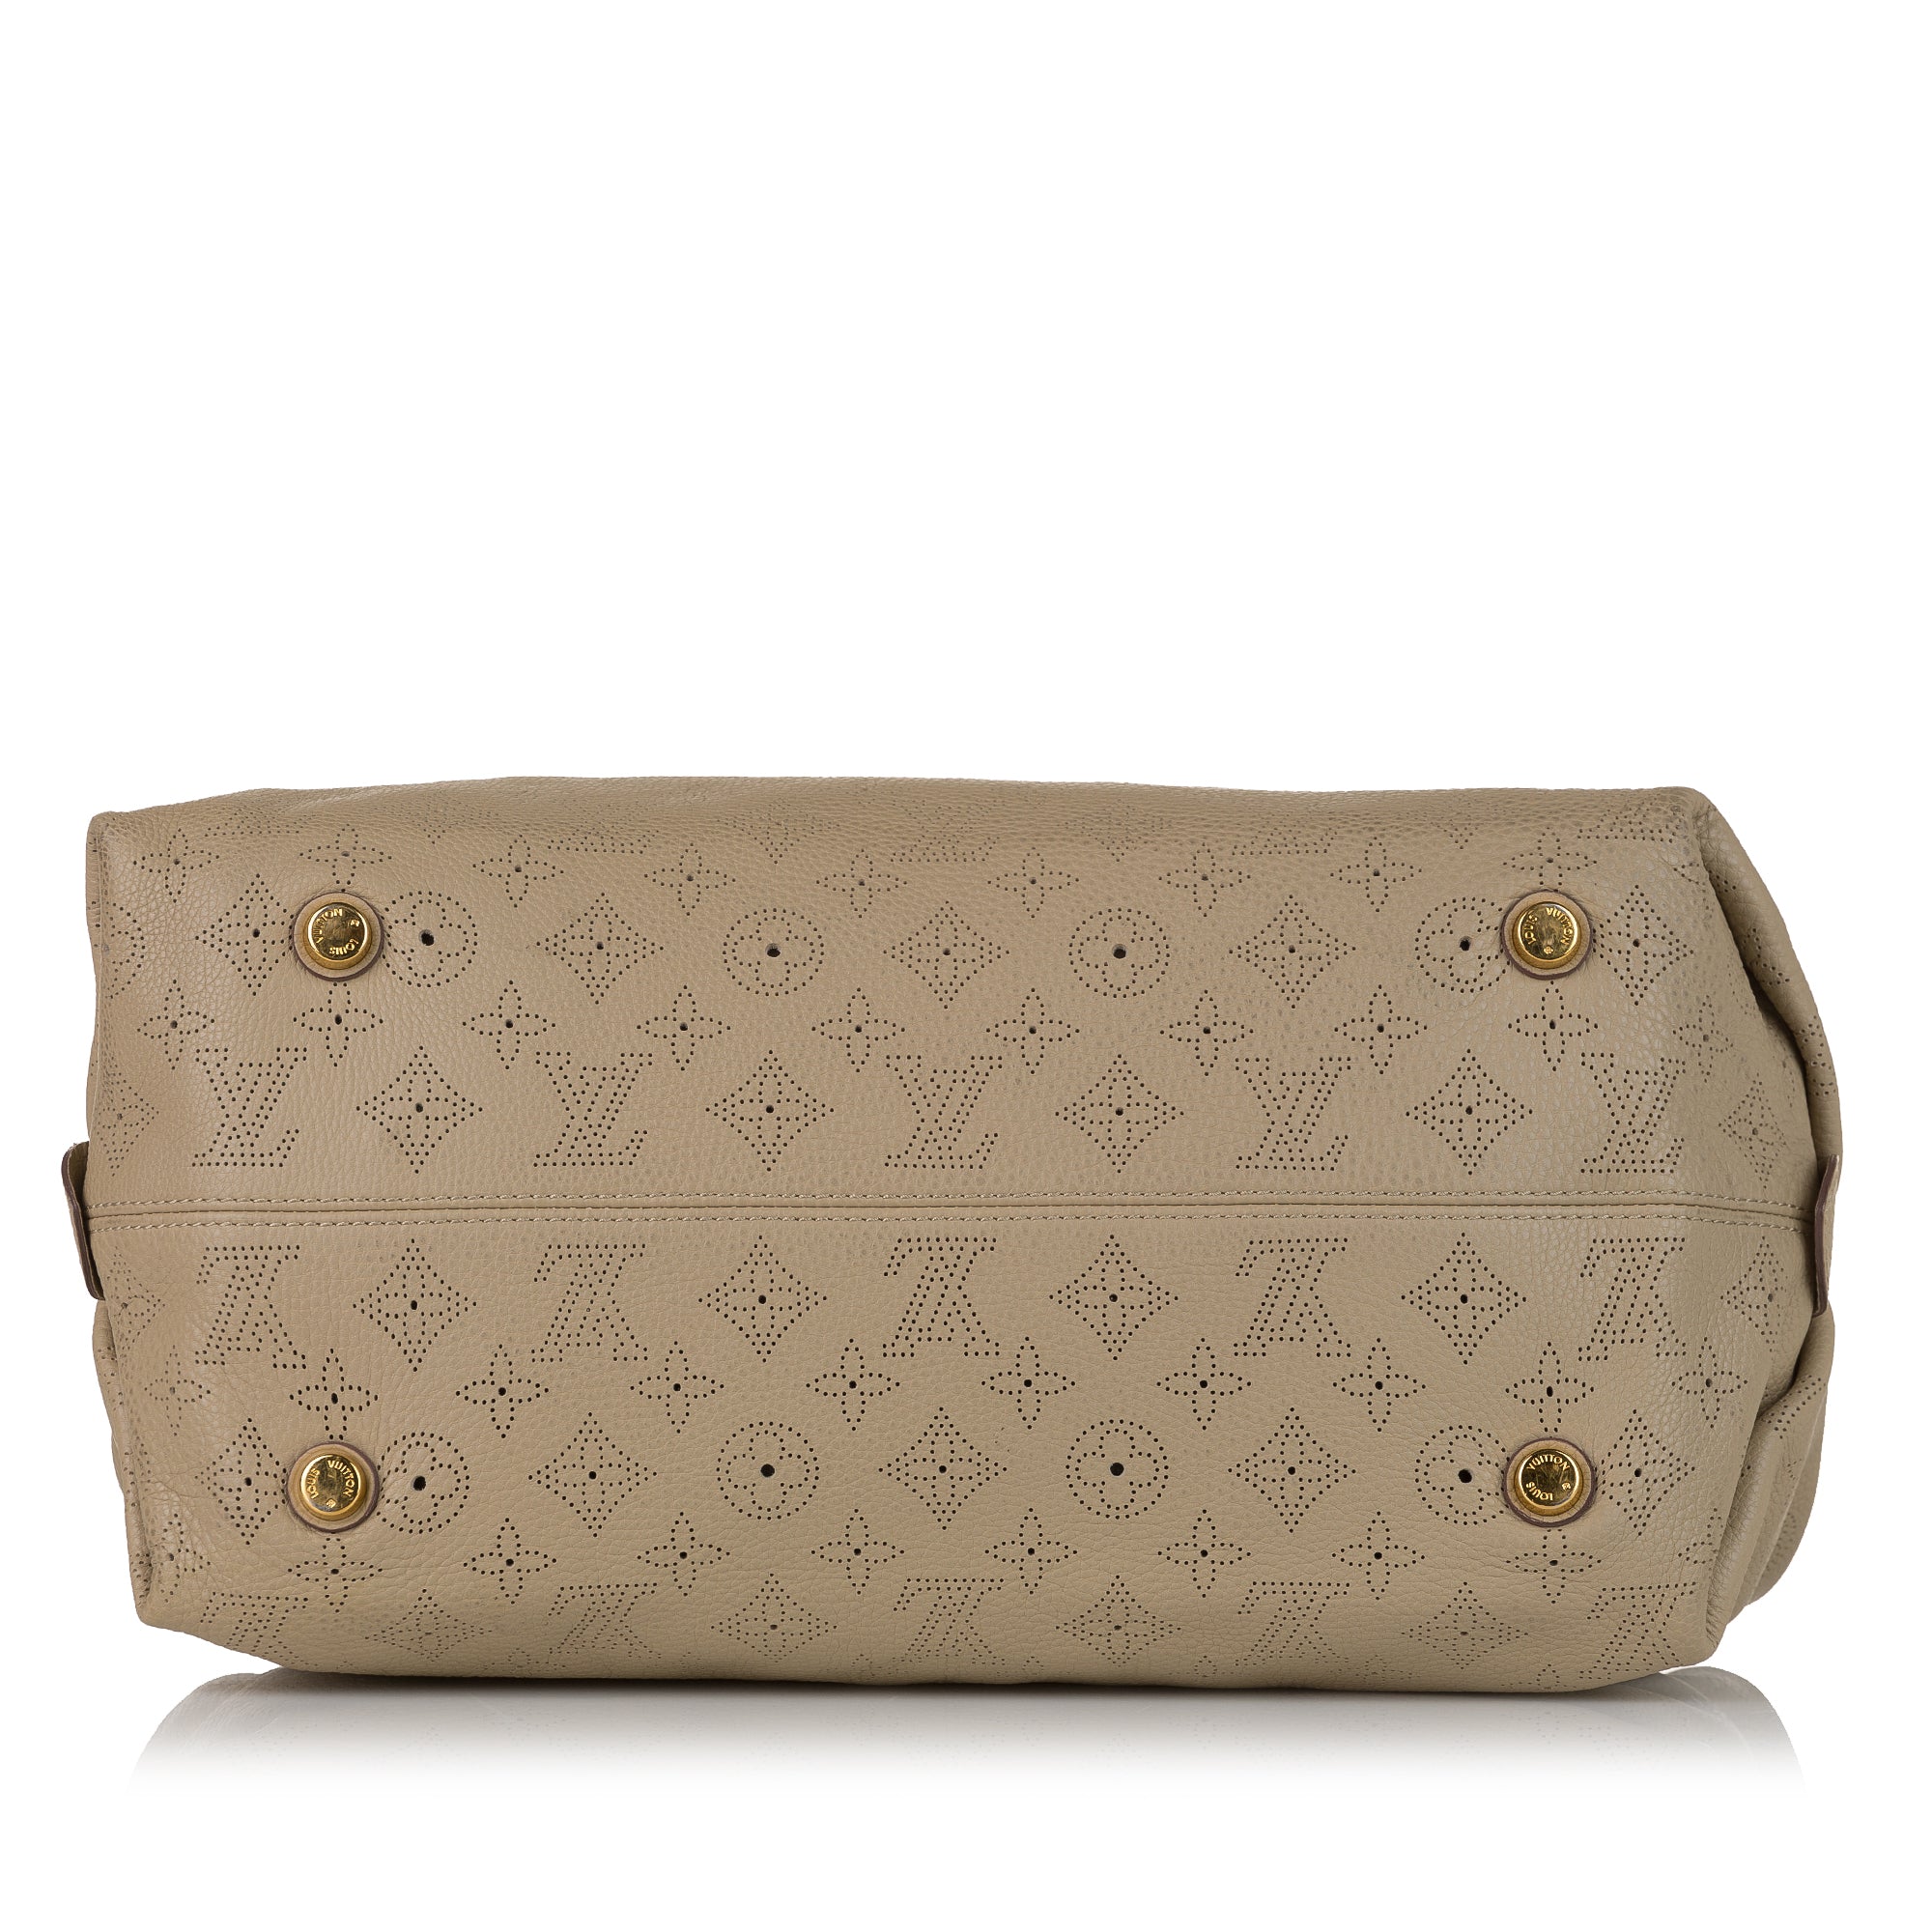 Handbags Louis Vuitton New Louis Vuitton Stellar Monogram Leather Mahina Perforated mm Bag Handbag